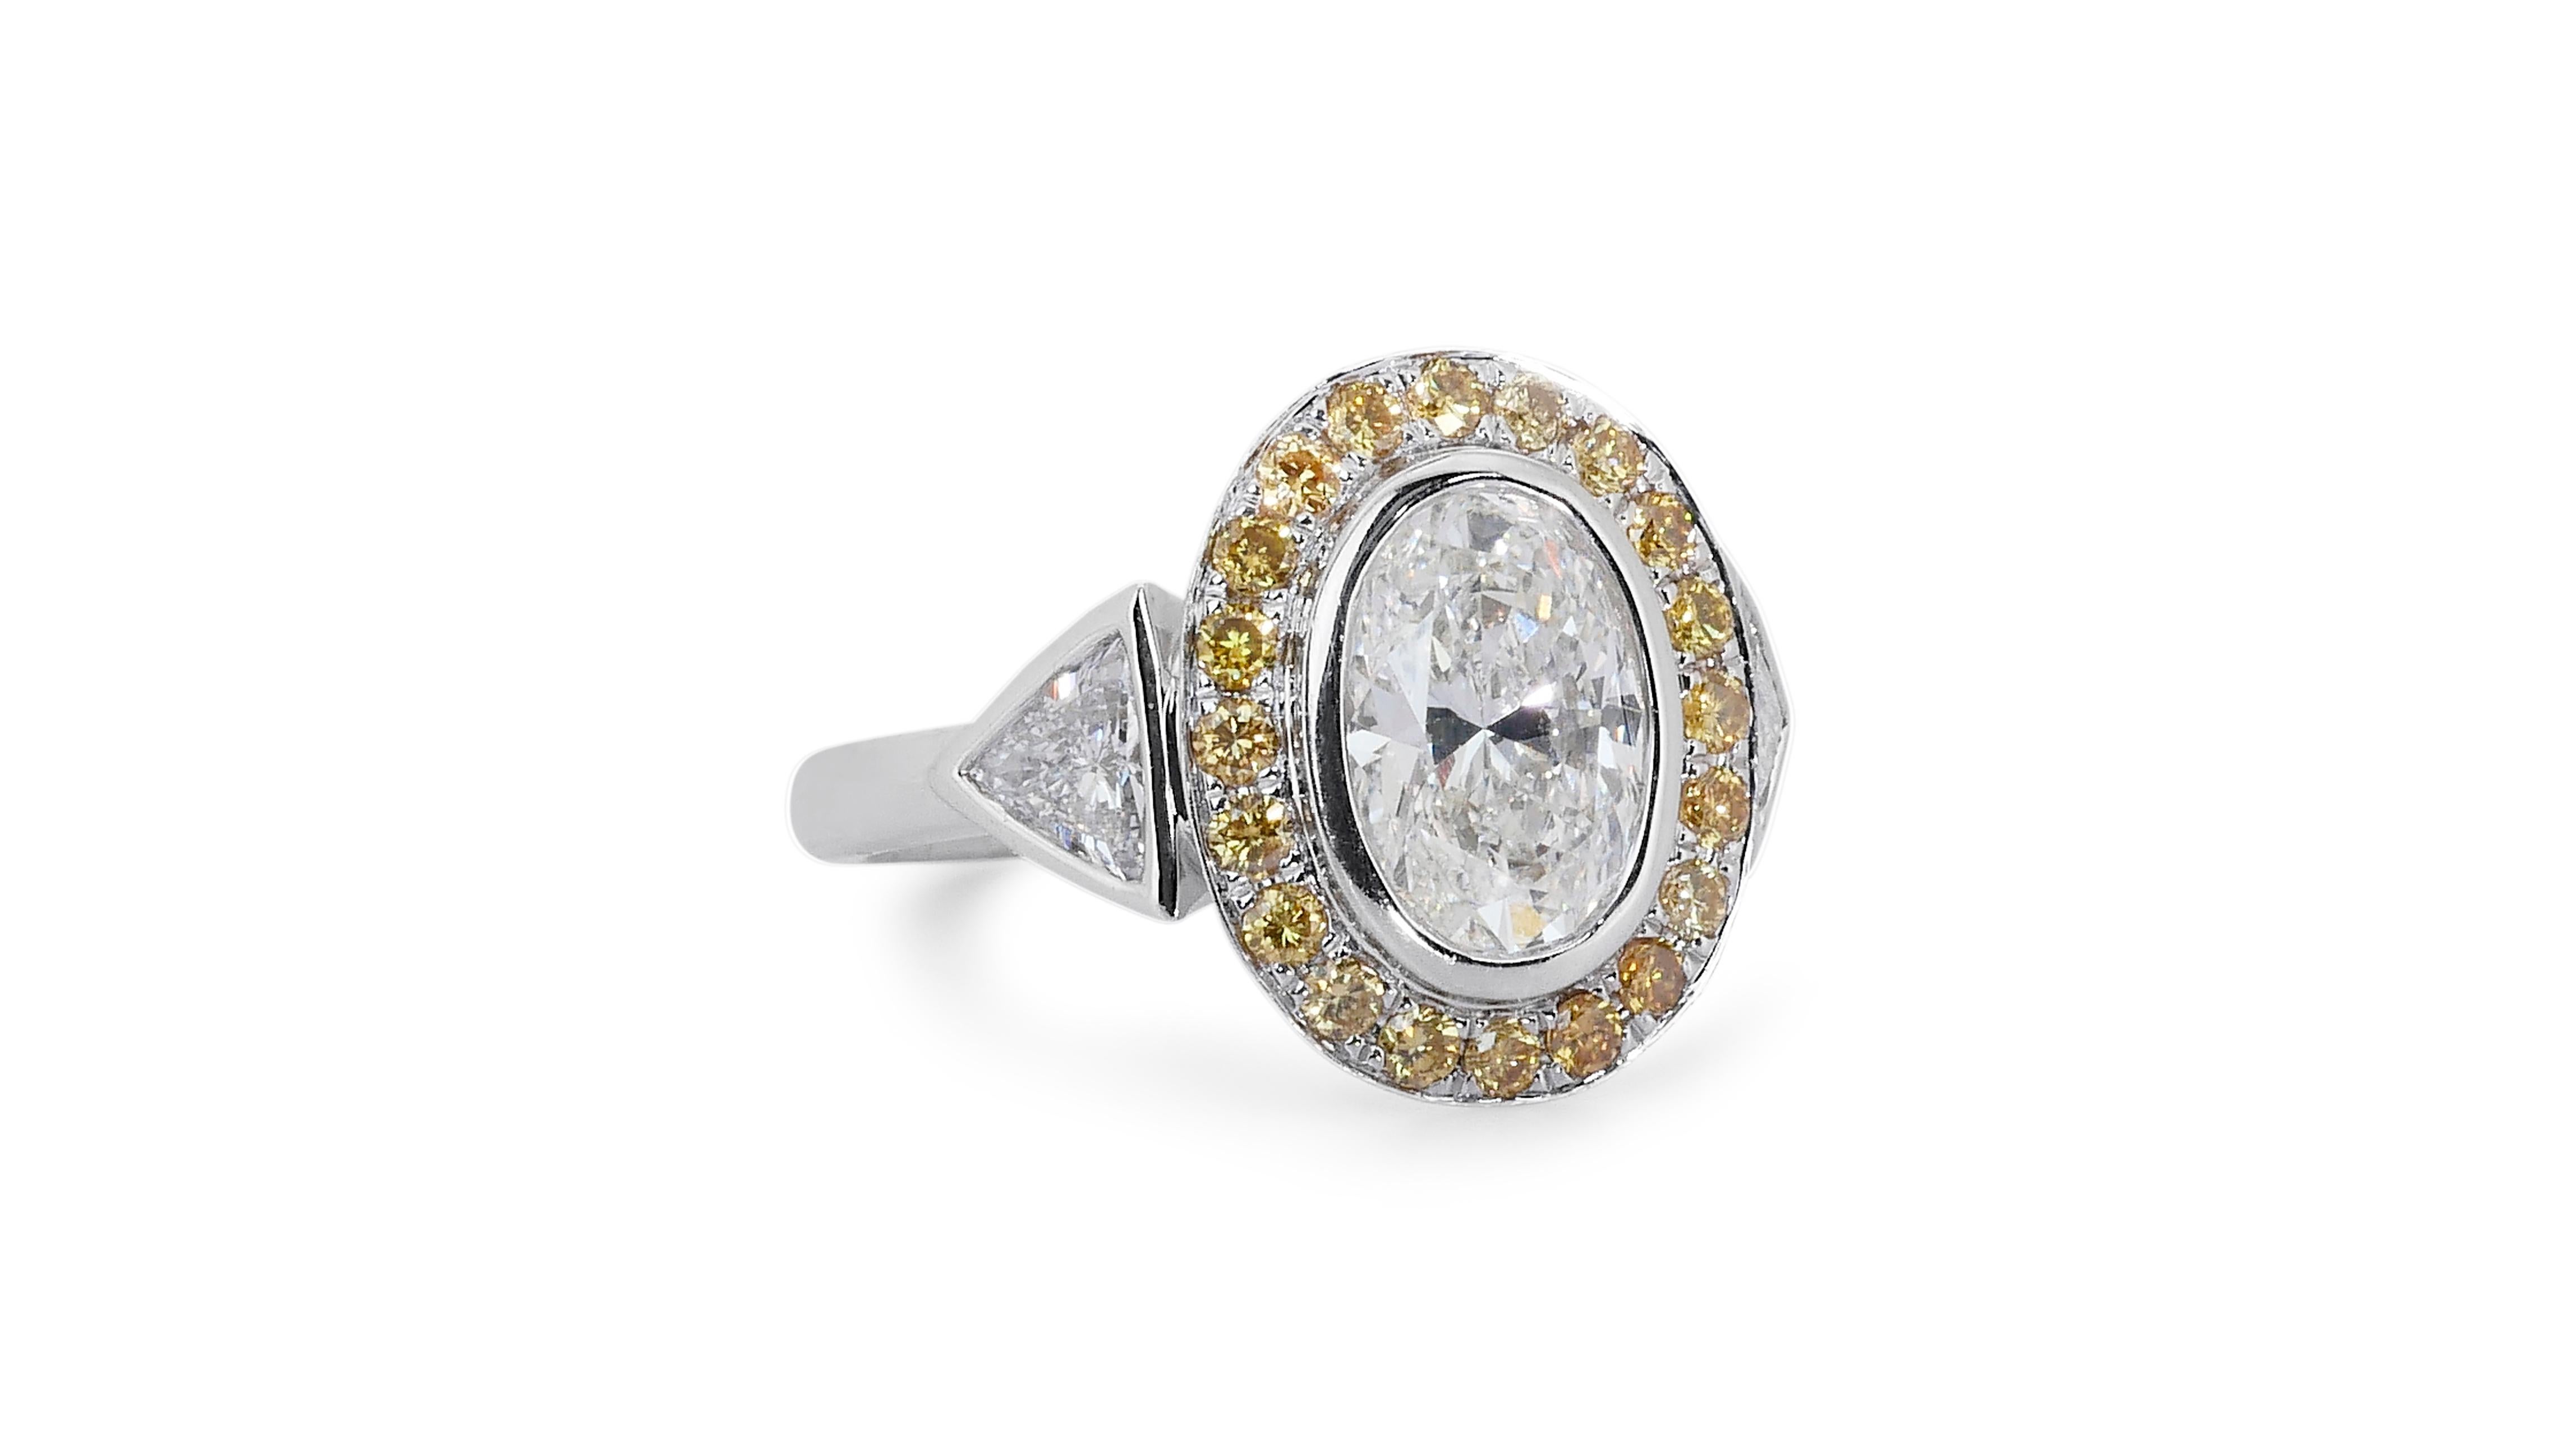 Mixed Cut Ravishing 18k White Gold Oval Ring w/ 1.90ct Natural Diamonds IGI Certificate For Sale